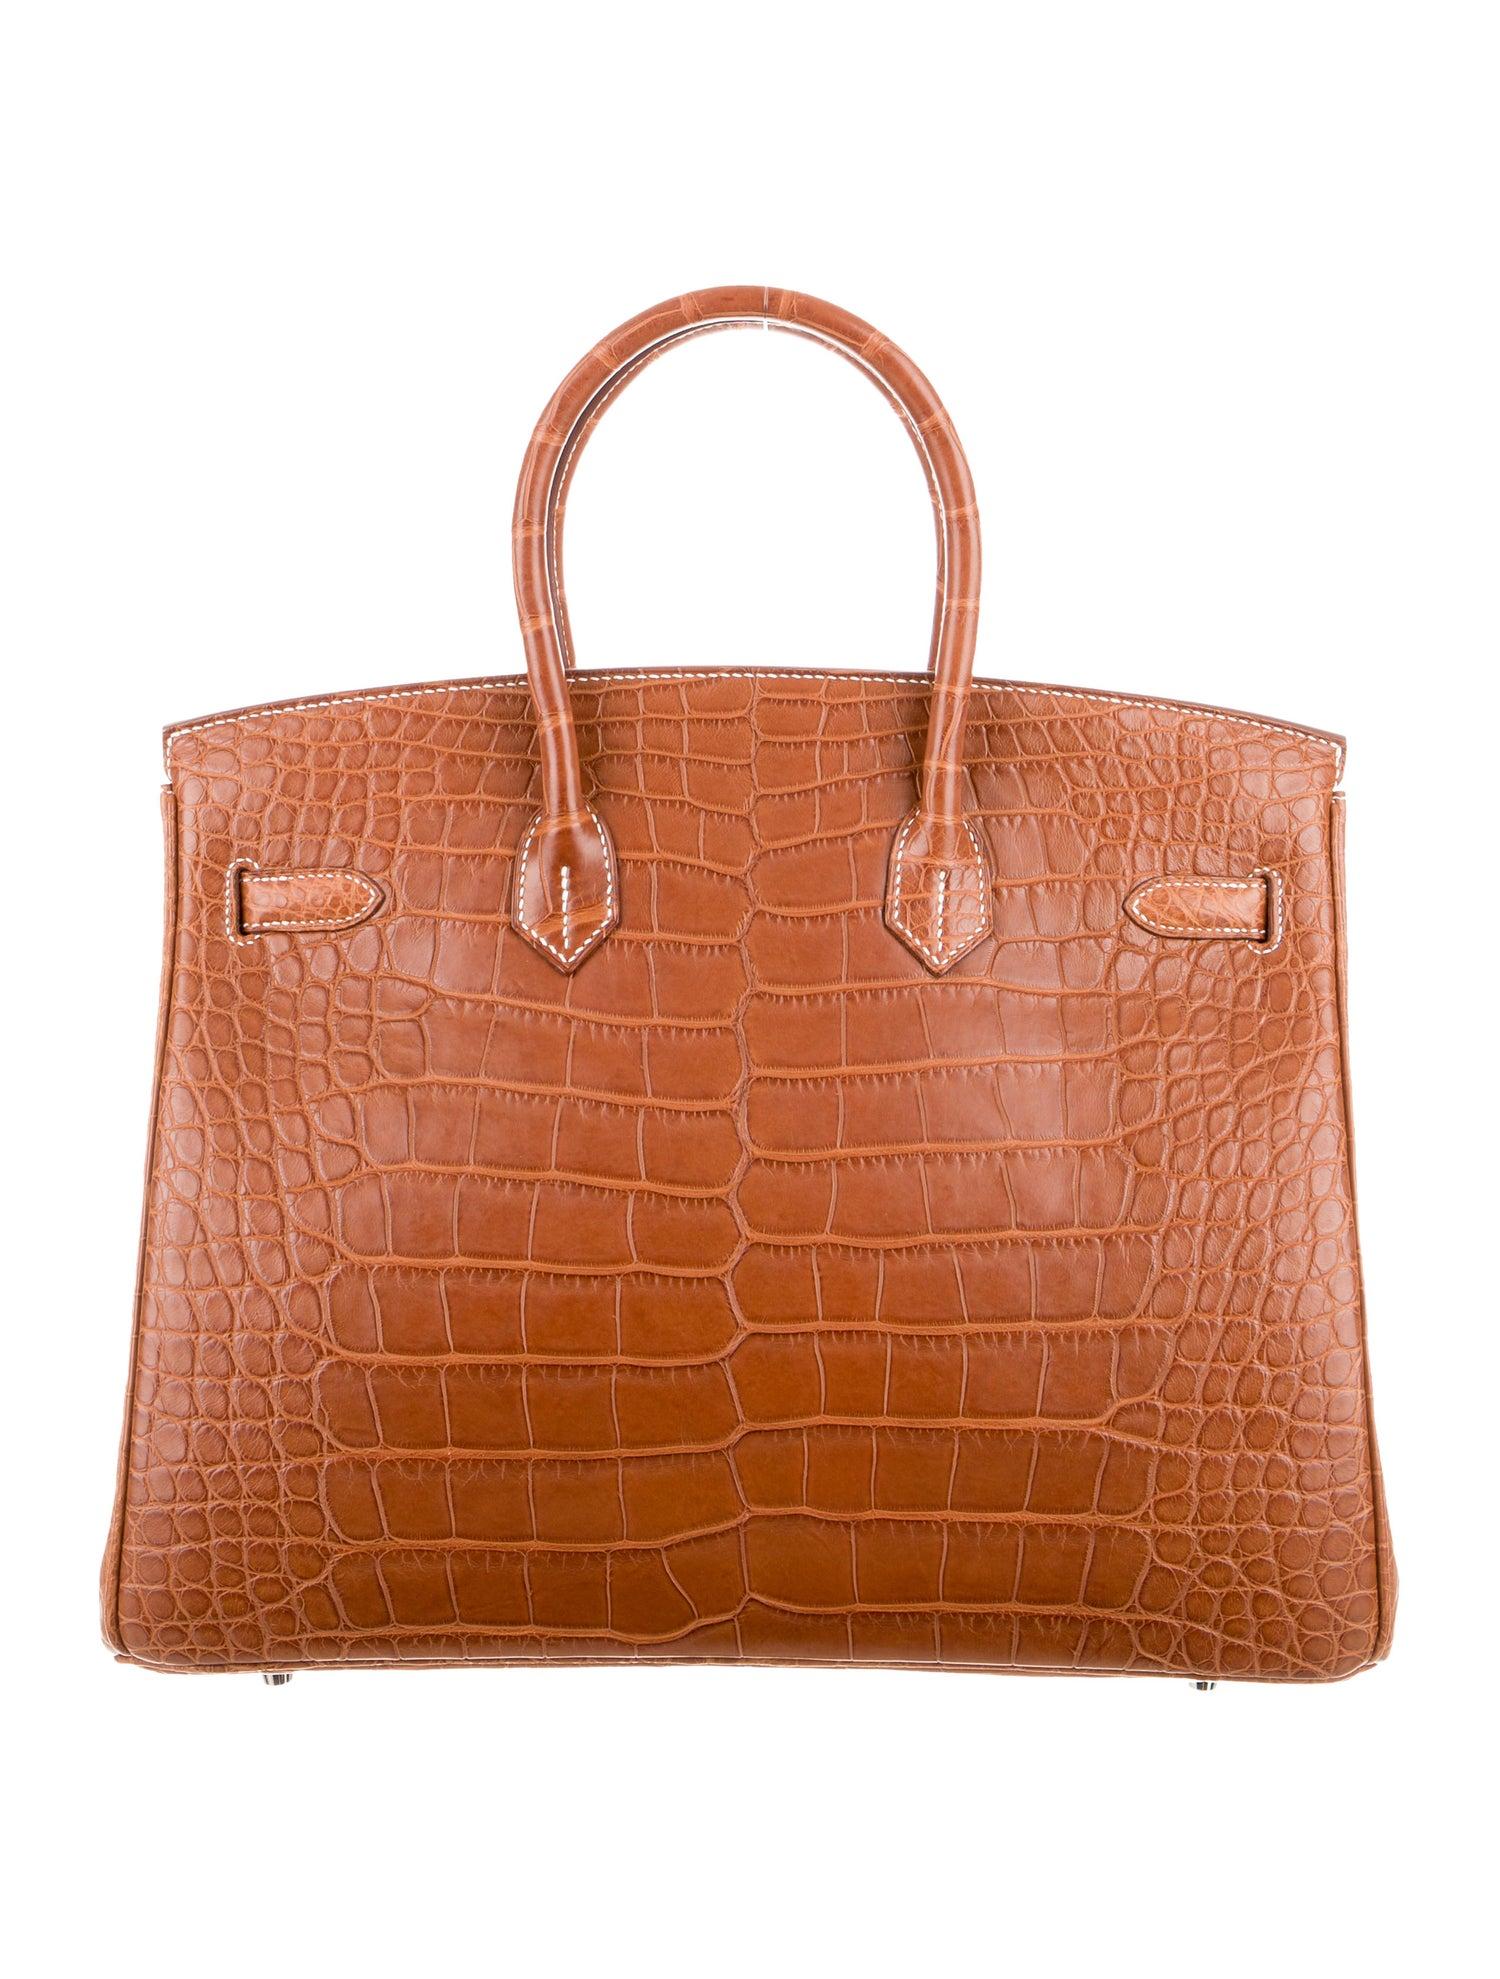 Orange Hermes NEW Birkin 35 Cognac Alligator Exotic Top Handle Satchel Tote Bag in Box 